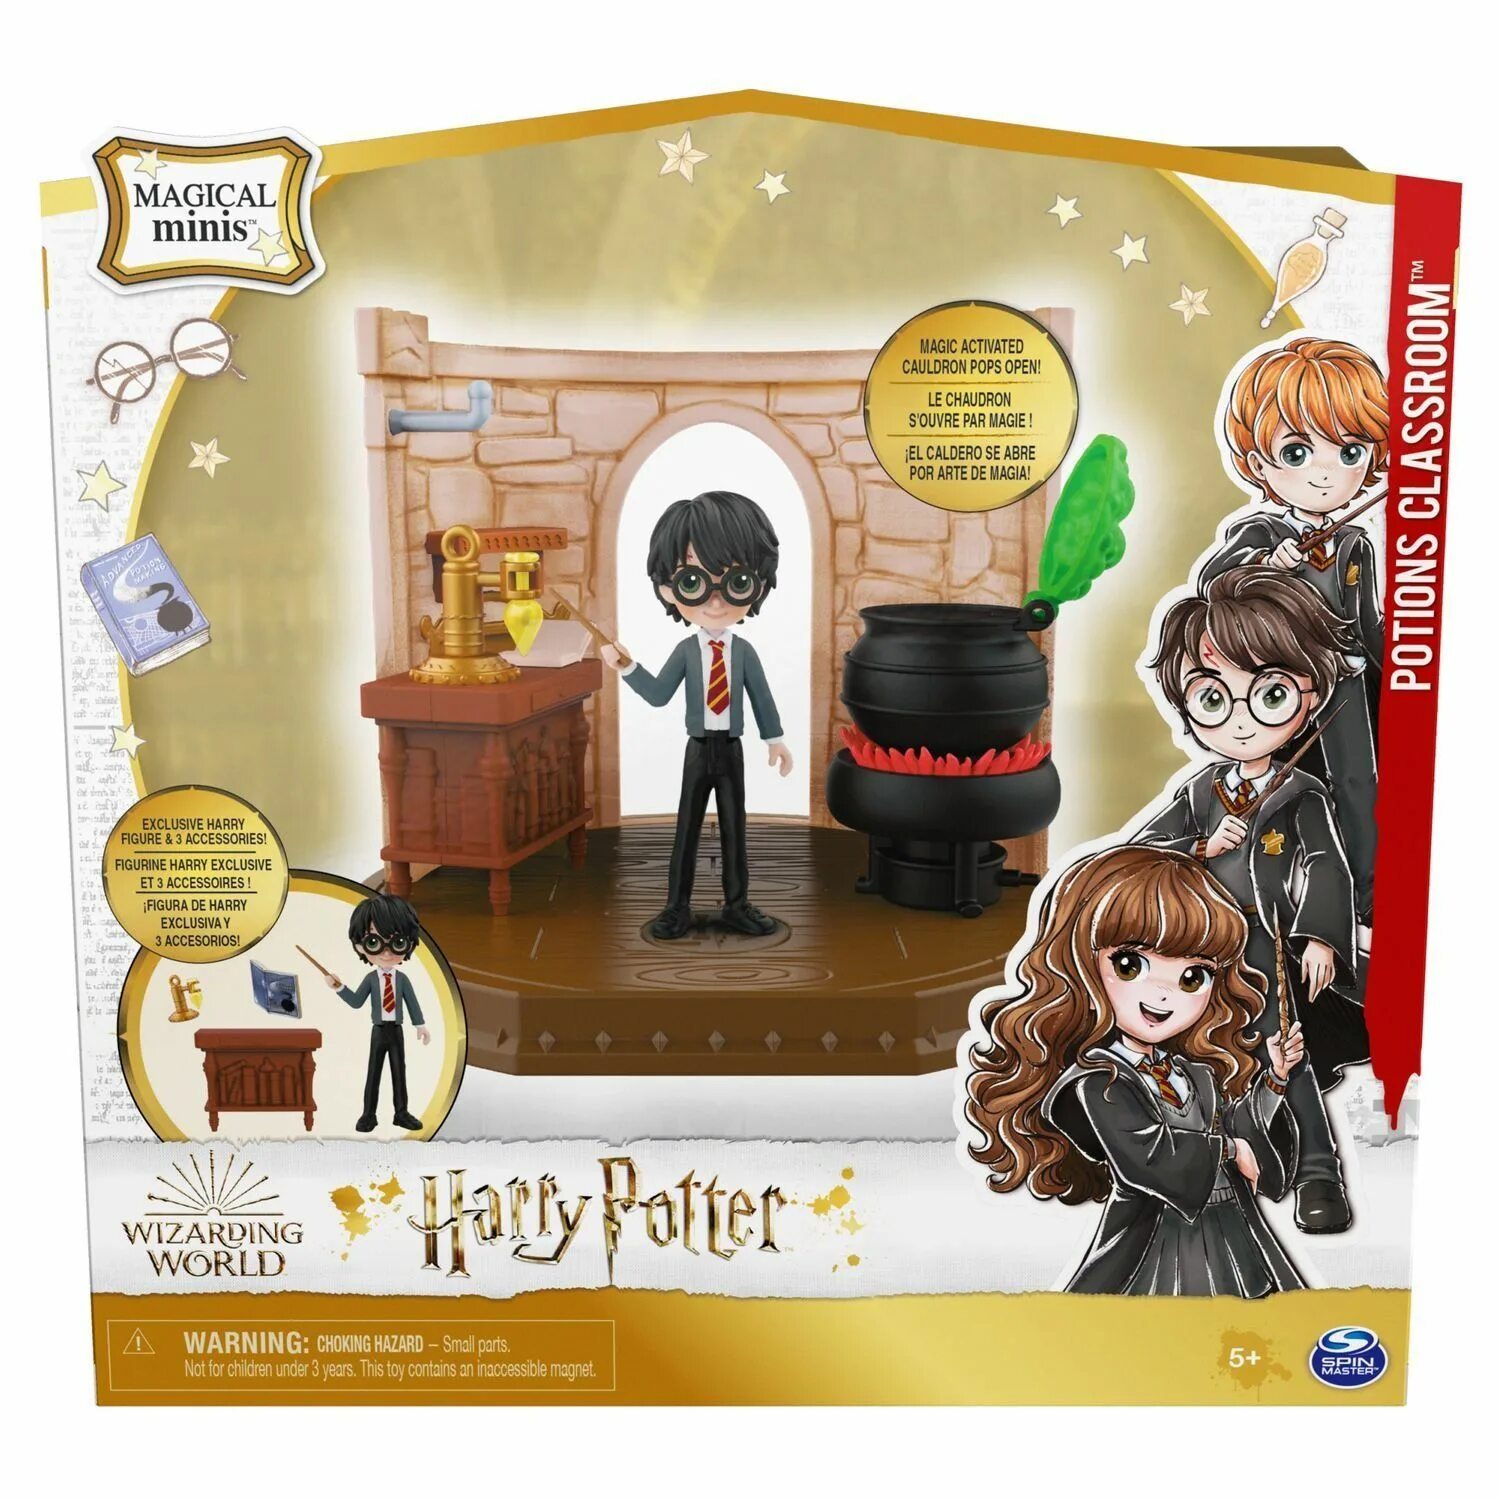 Mini magics. Набор Harry Potter Magical Minis. Wizarding World of Harry Potter фигурки.